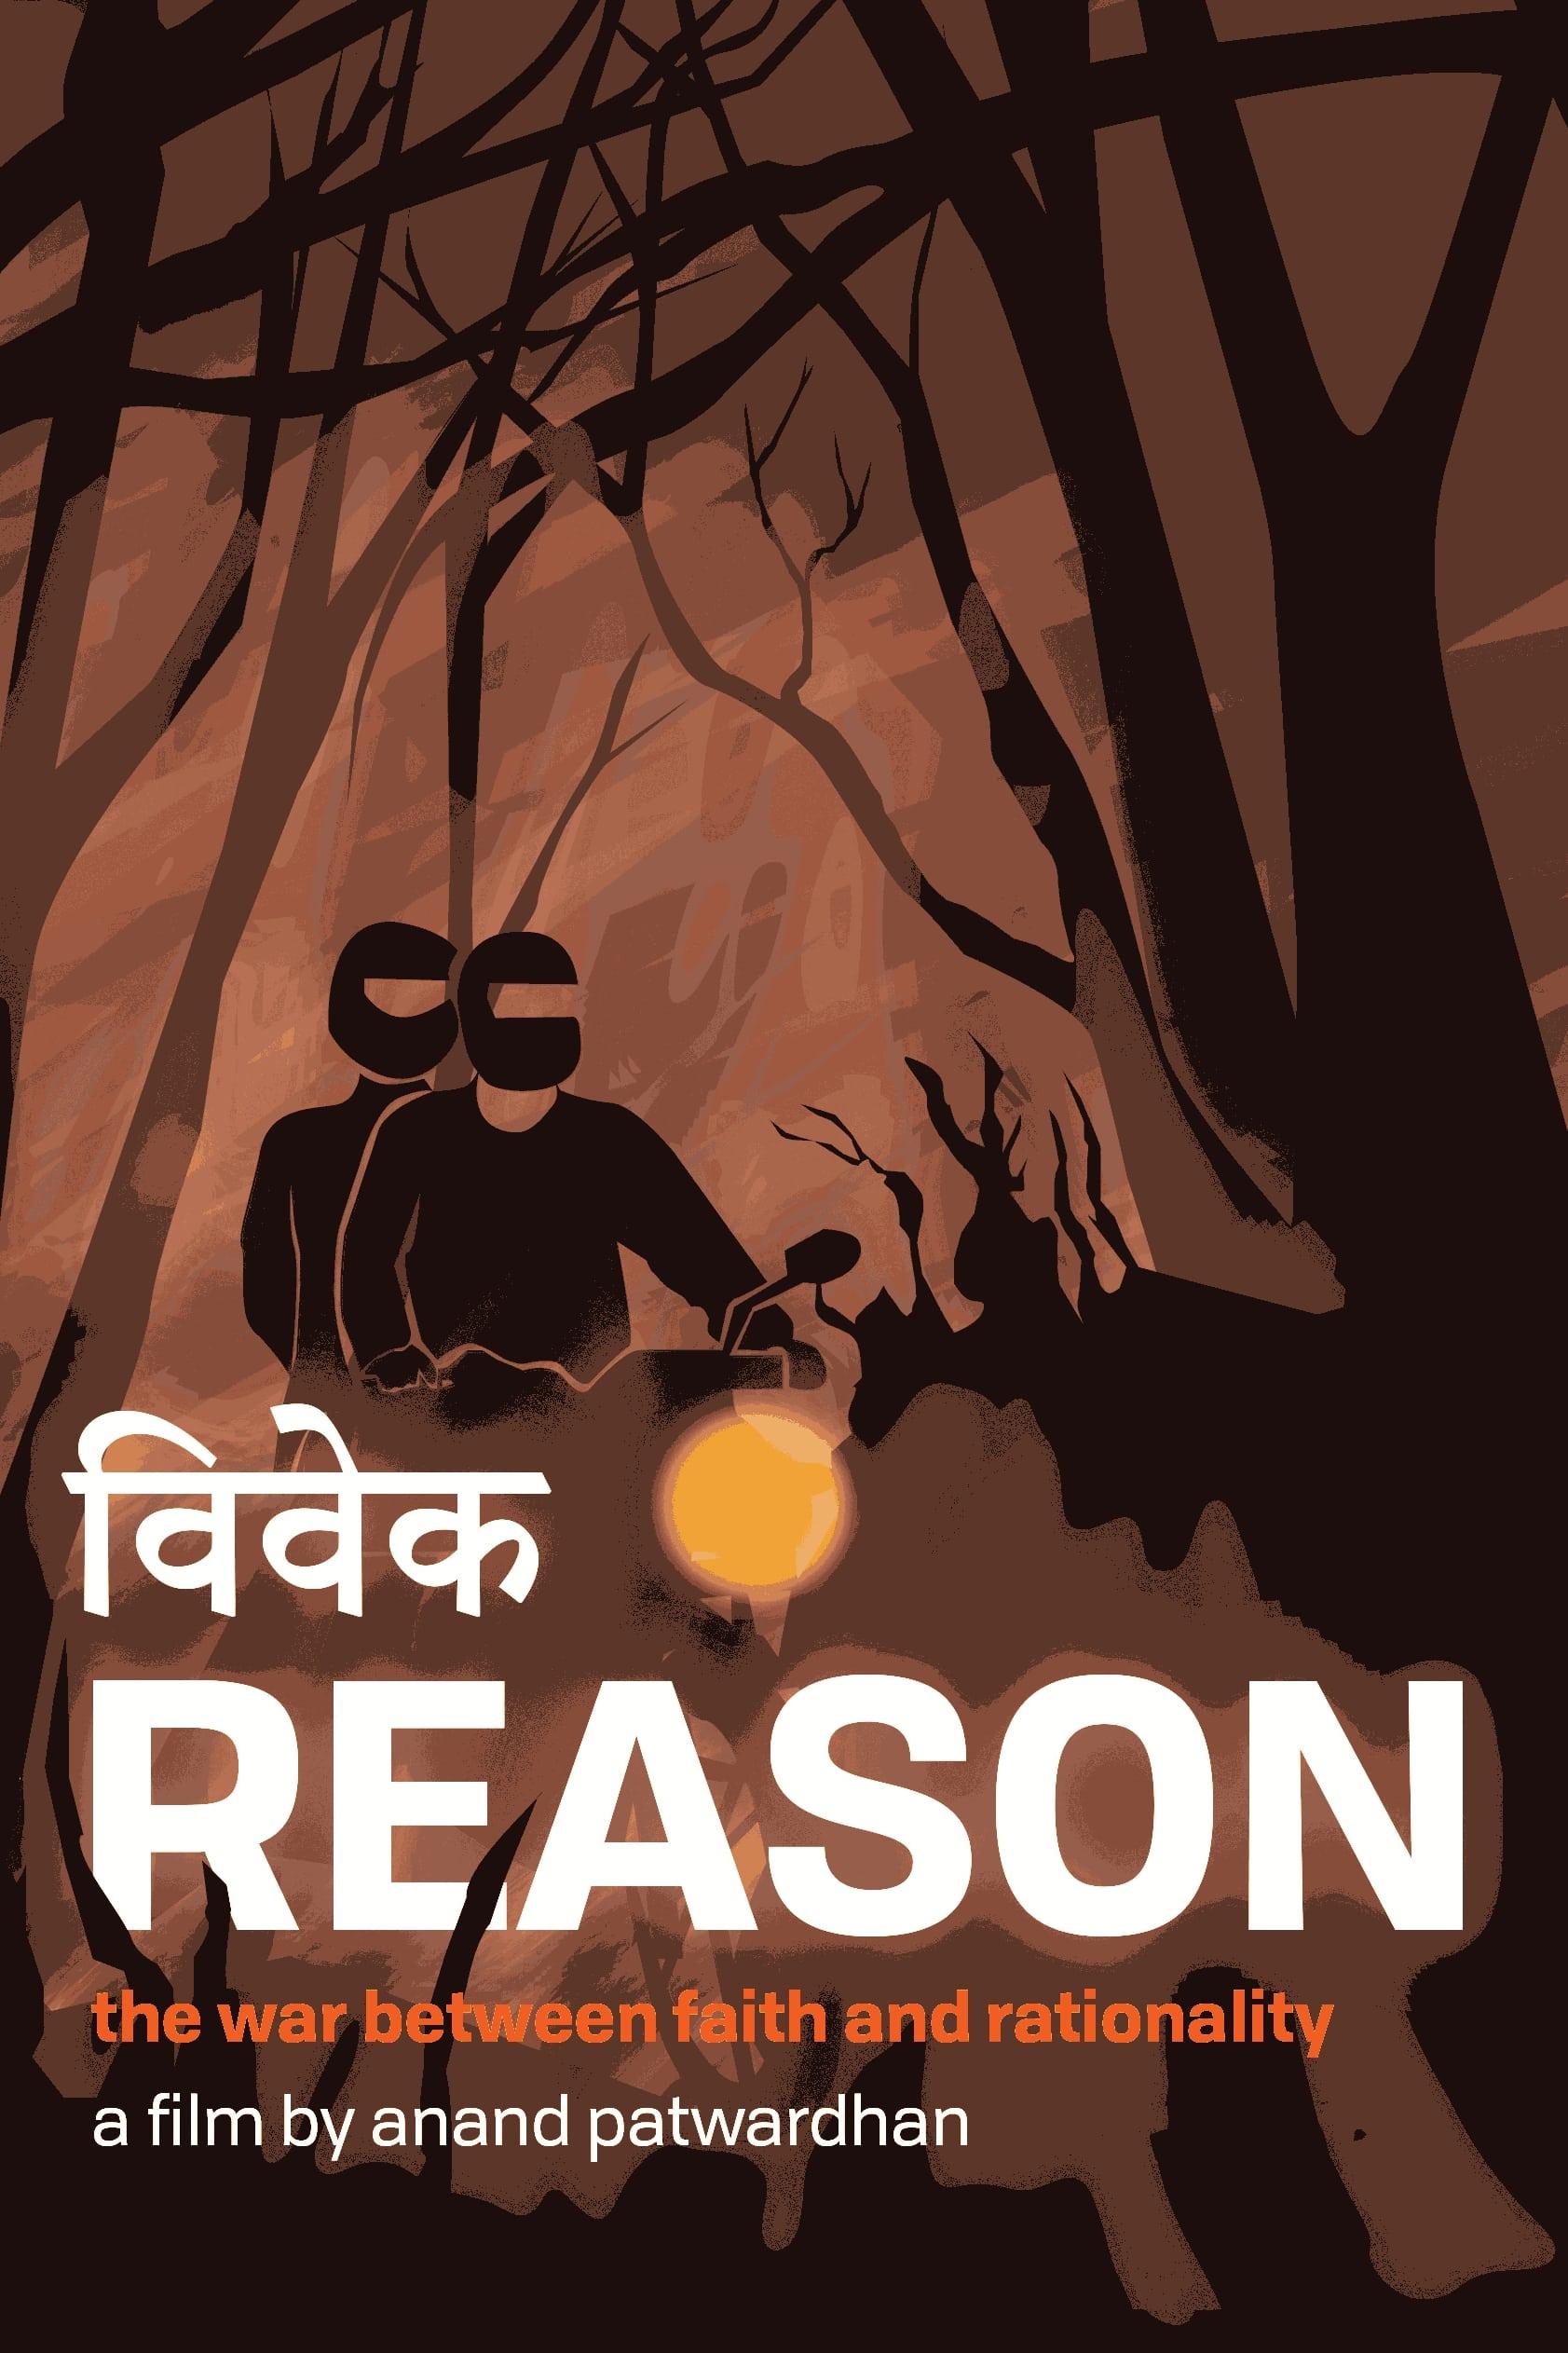 Reason poster